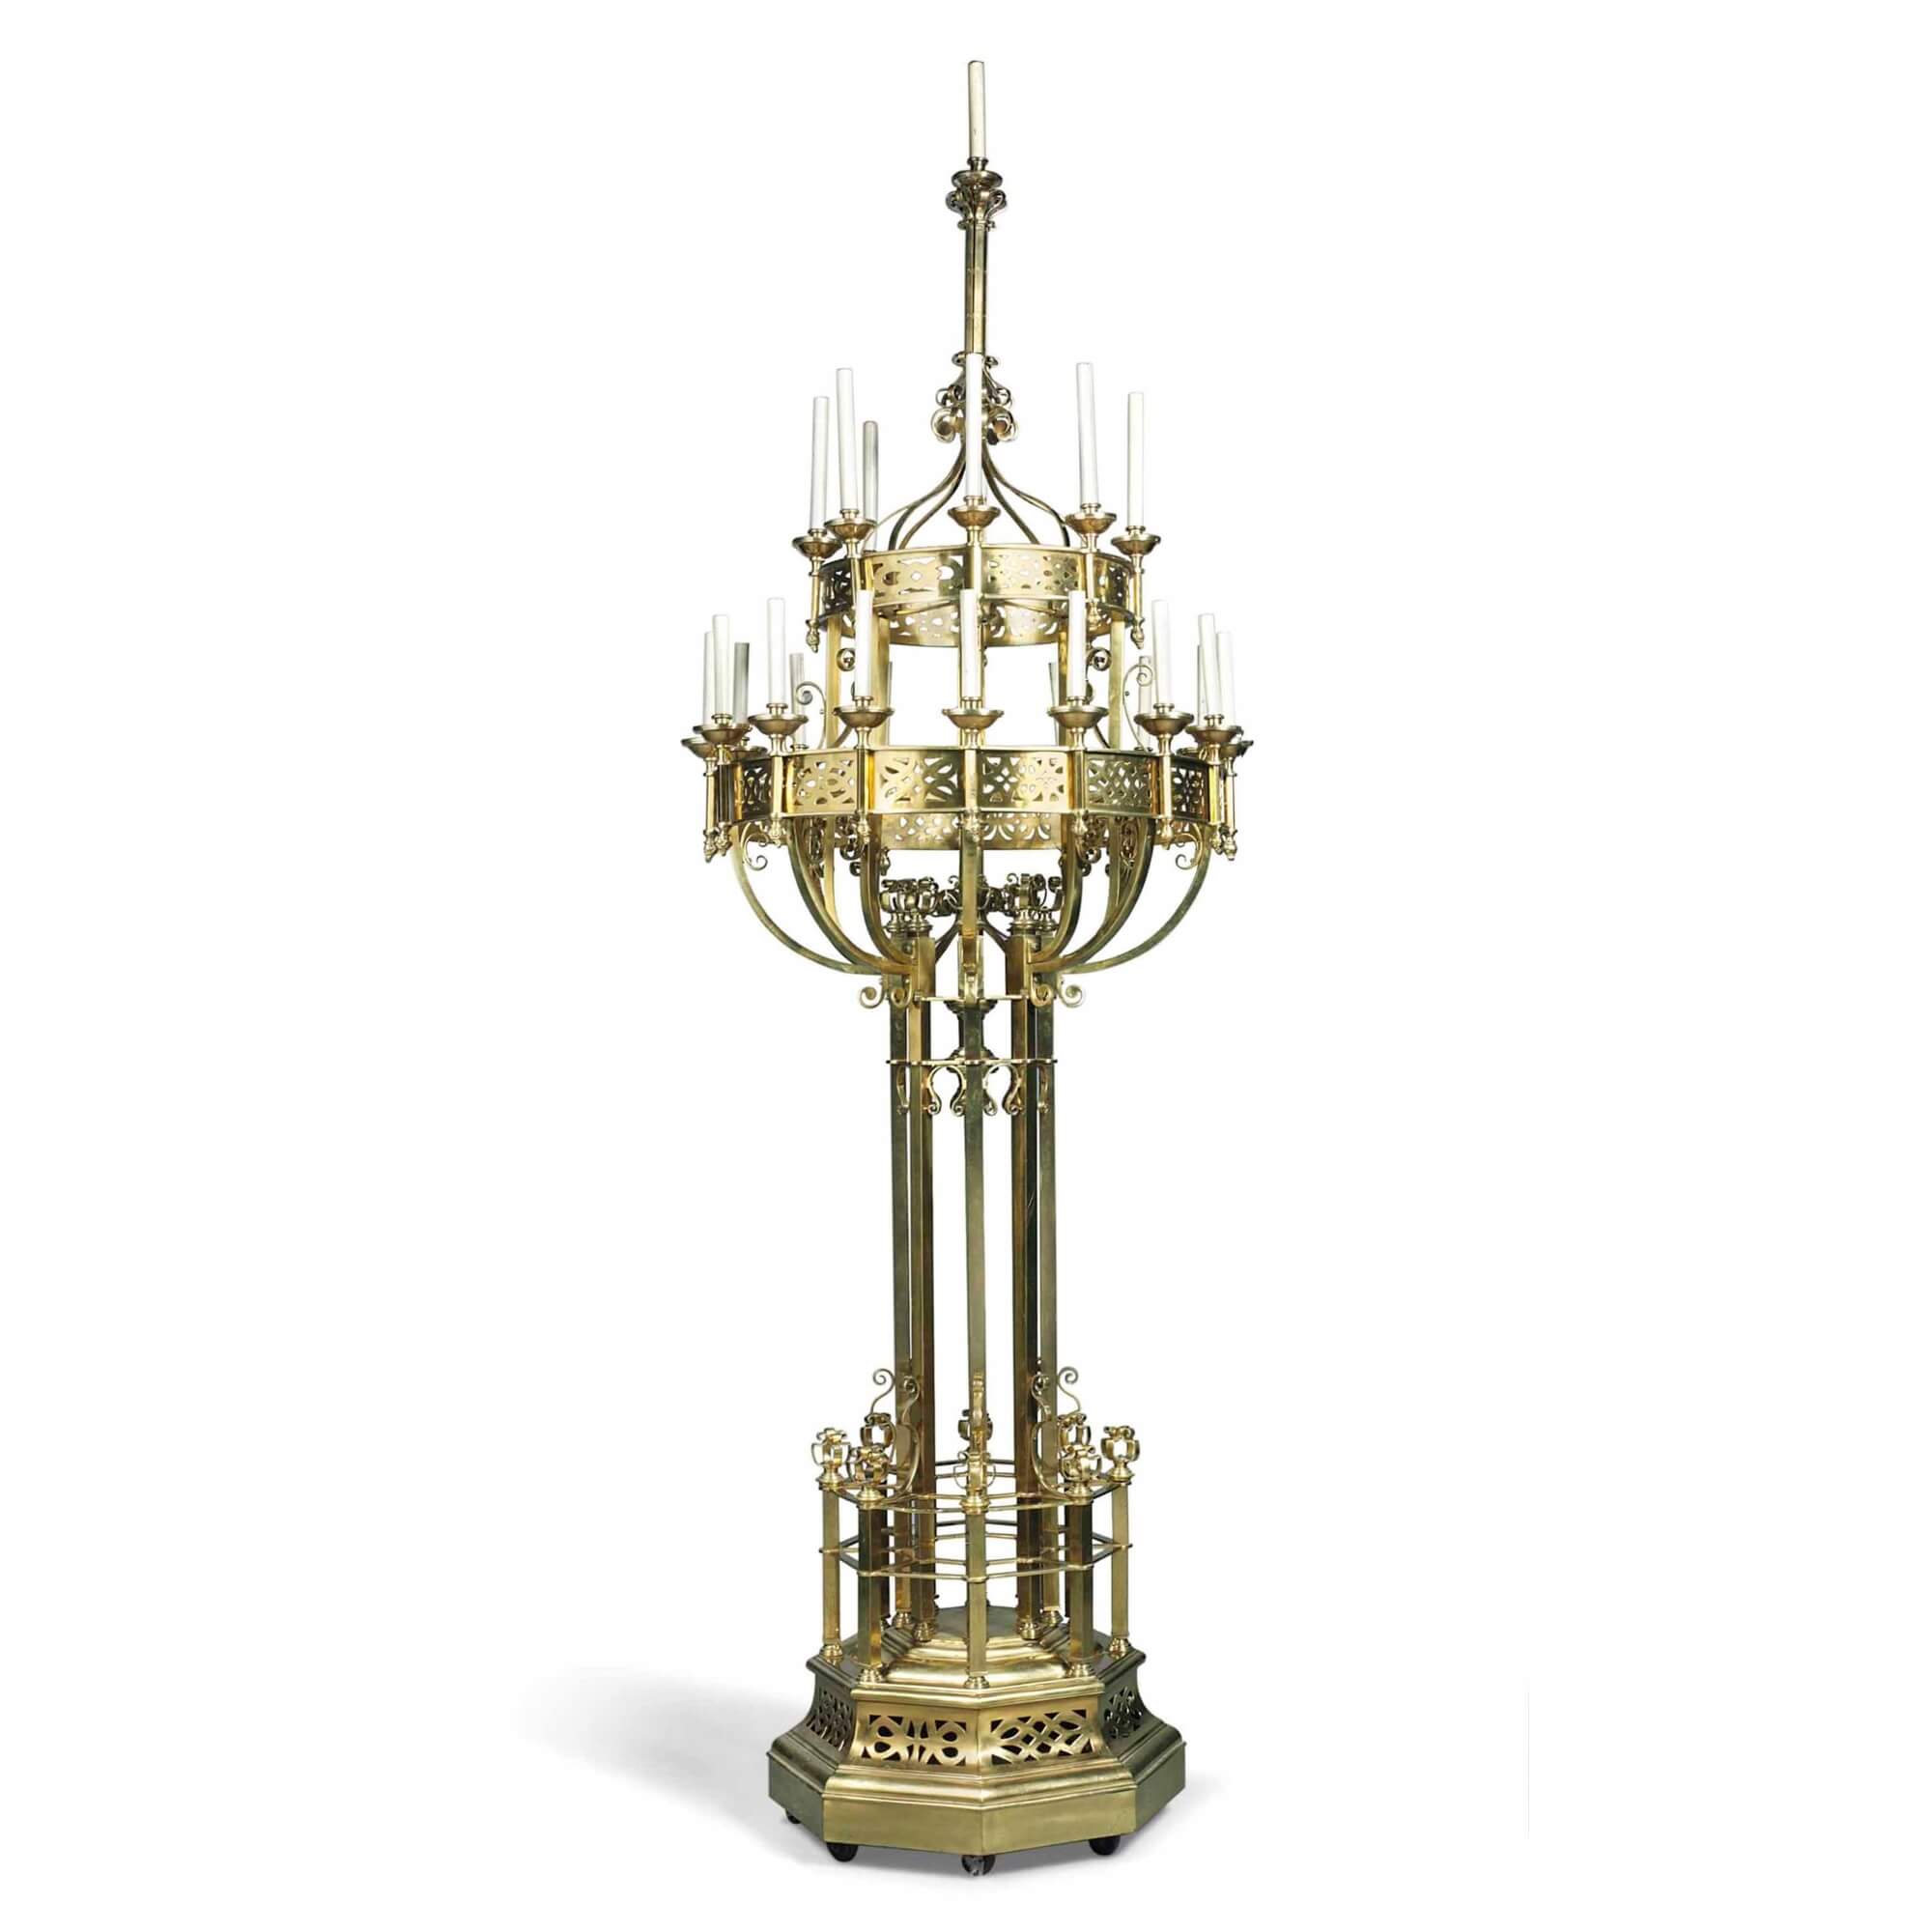 Antique French Gothic style church brass candelabra.